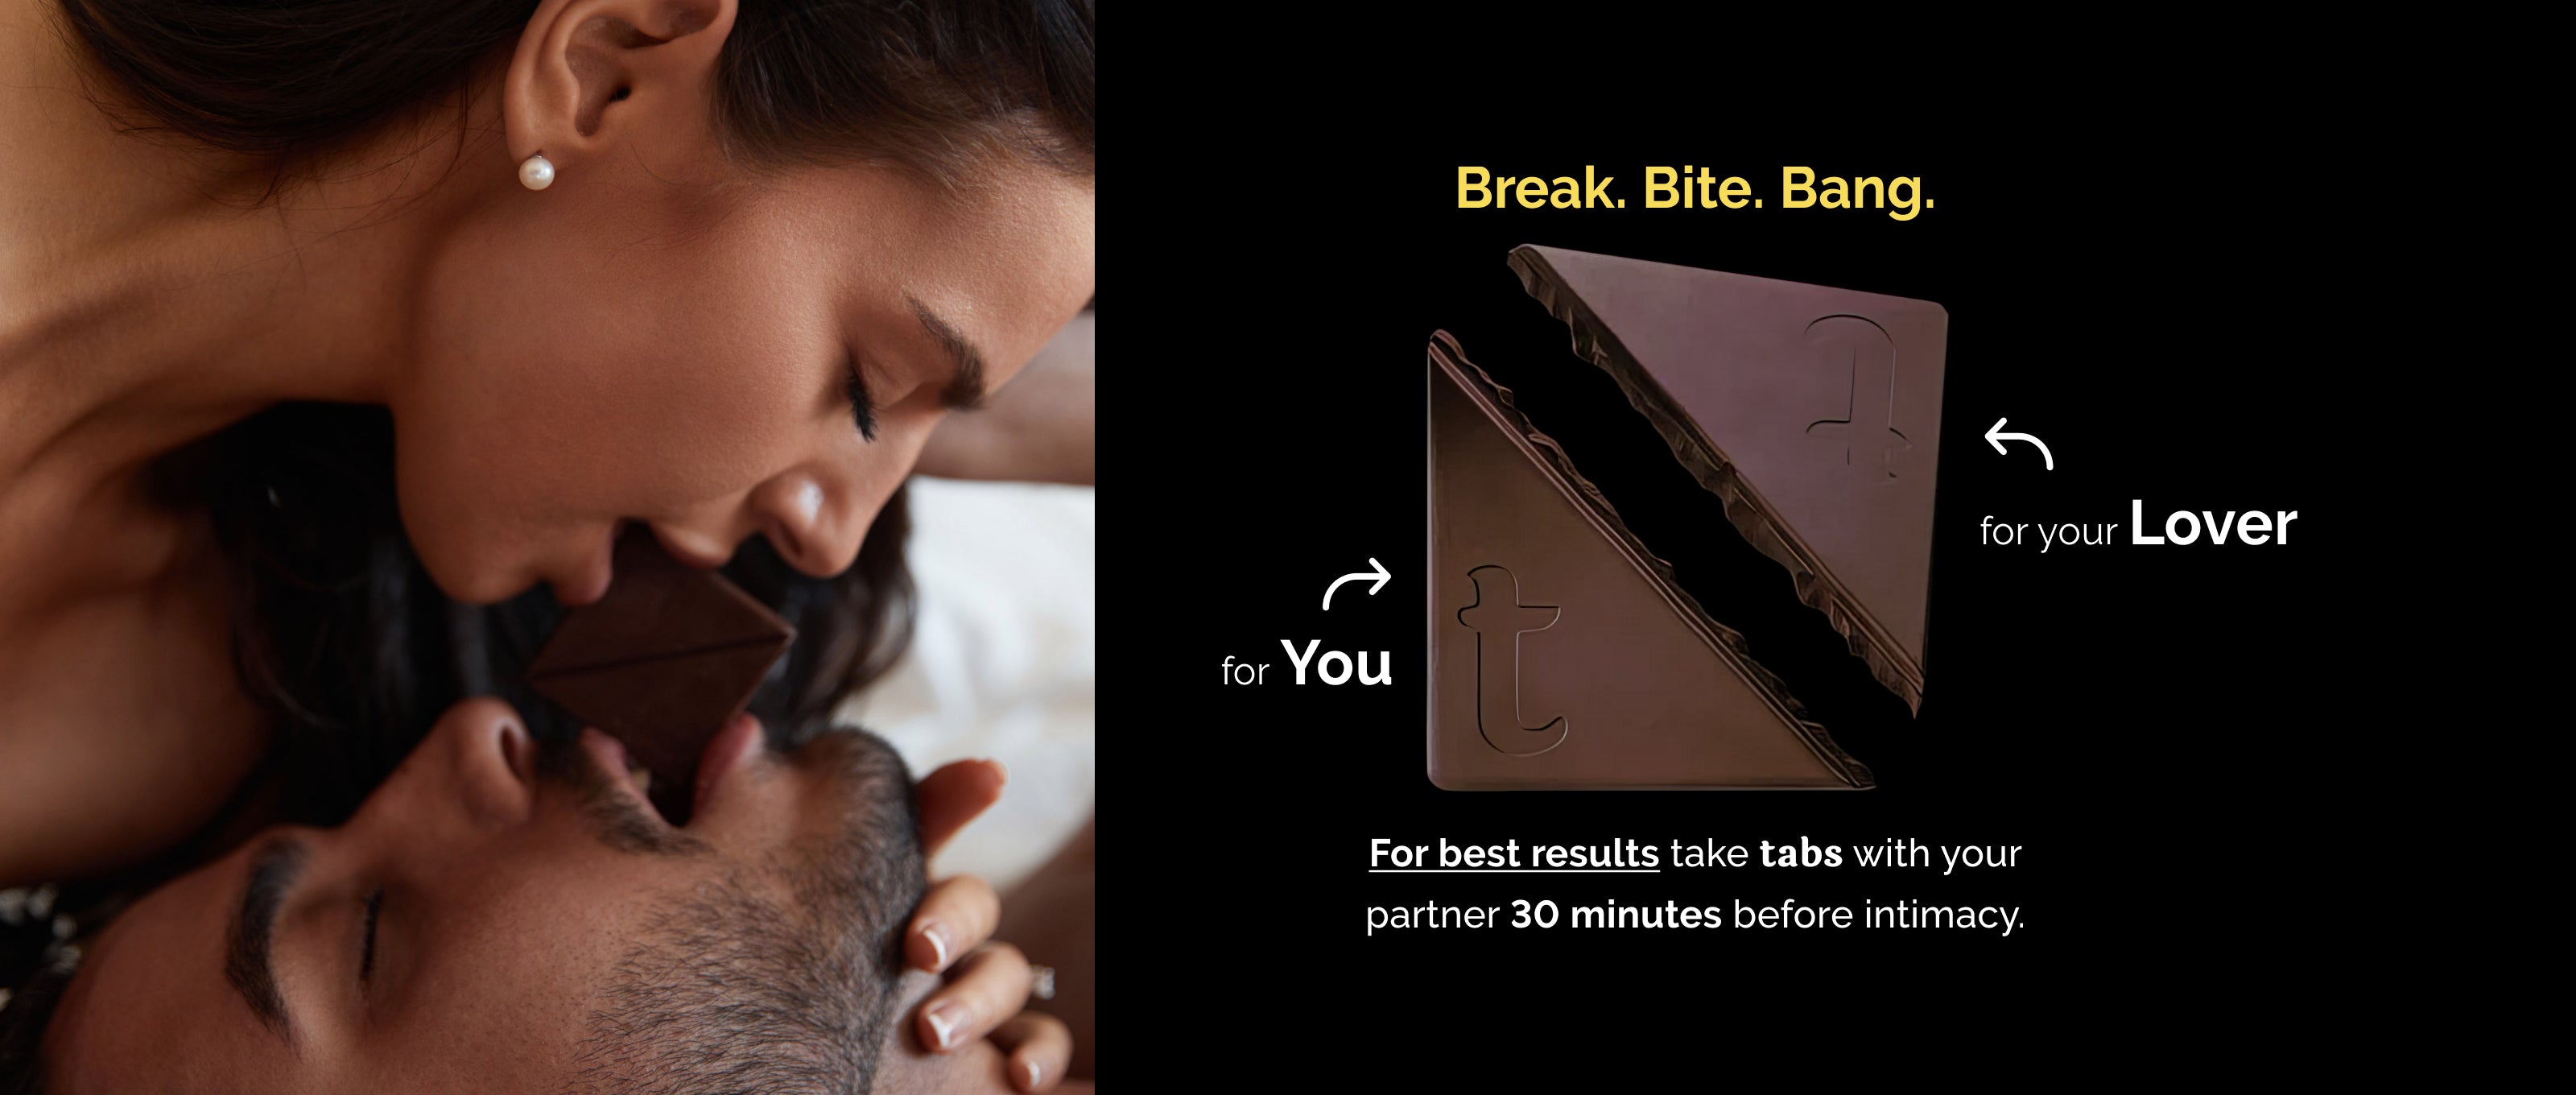 Sex BonBon  Libido Boosting Sex Chocolates For Date Night – The